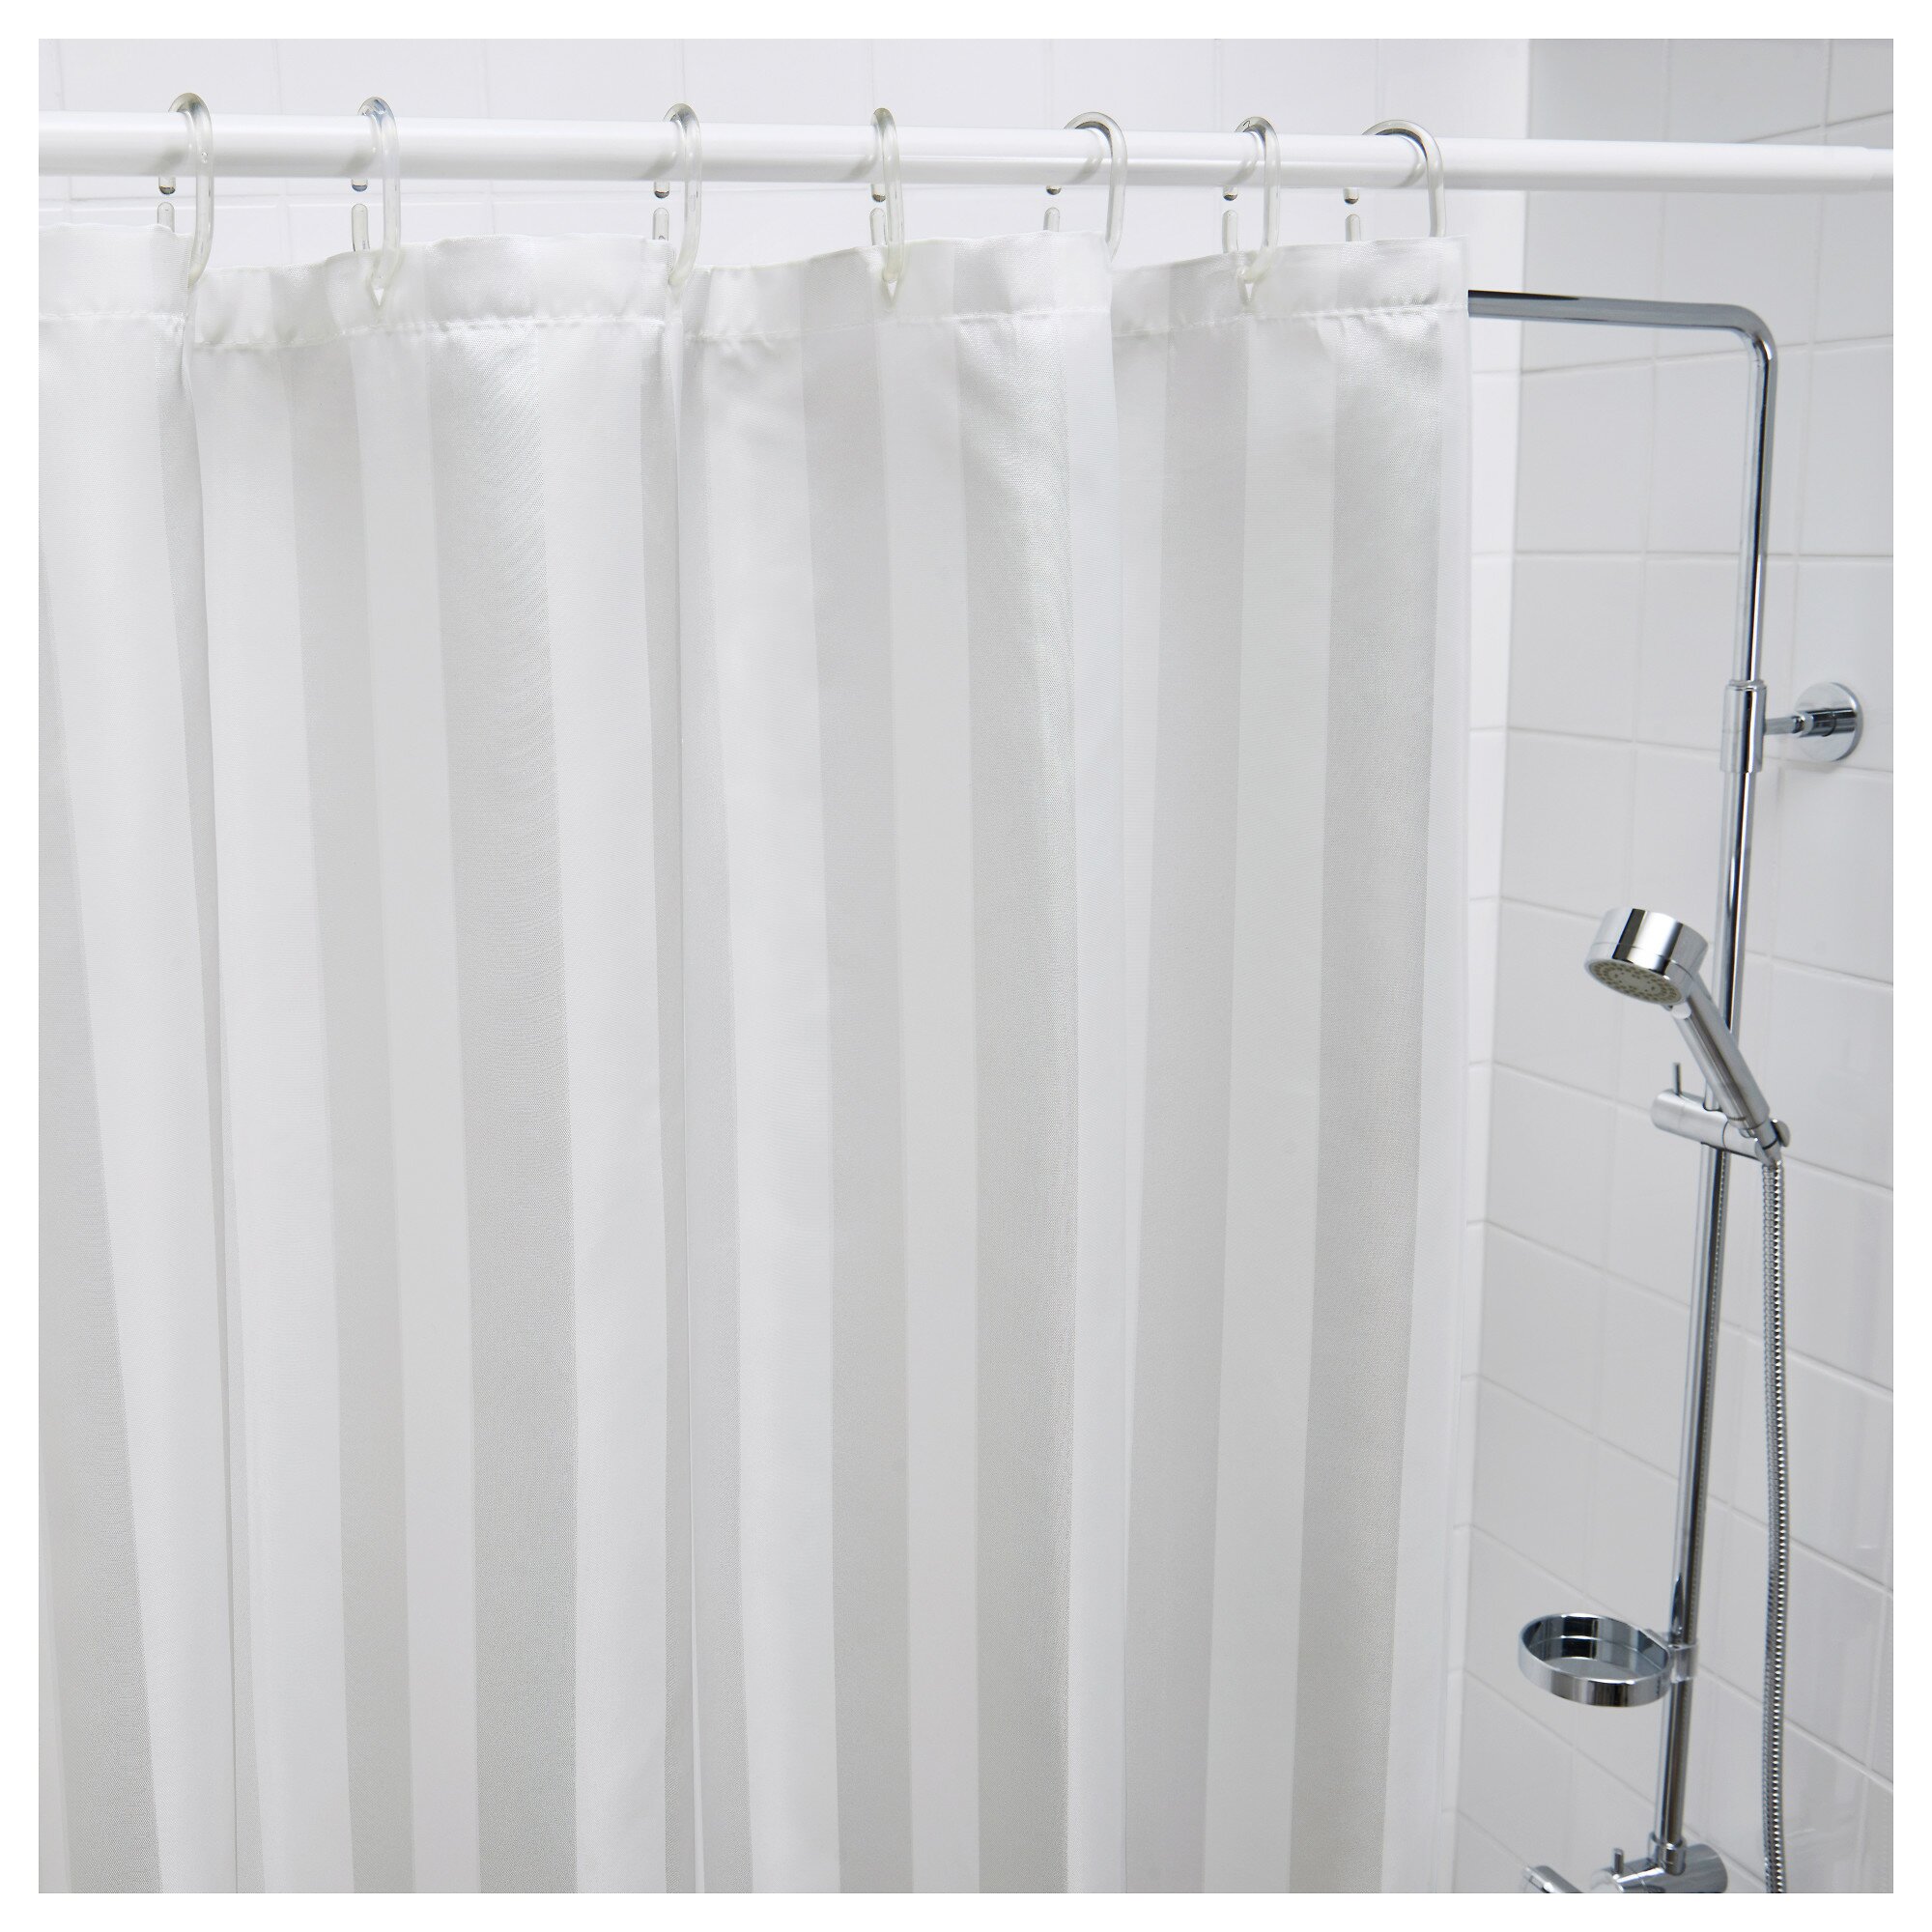 Ikea Shower Curtain for Best Your Bathroom Decoration: Fancy Shower Curtains | 84in Shower Curtain | Ikea Shower Curtain